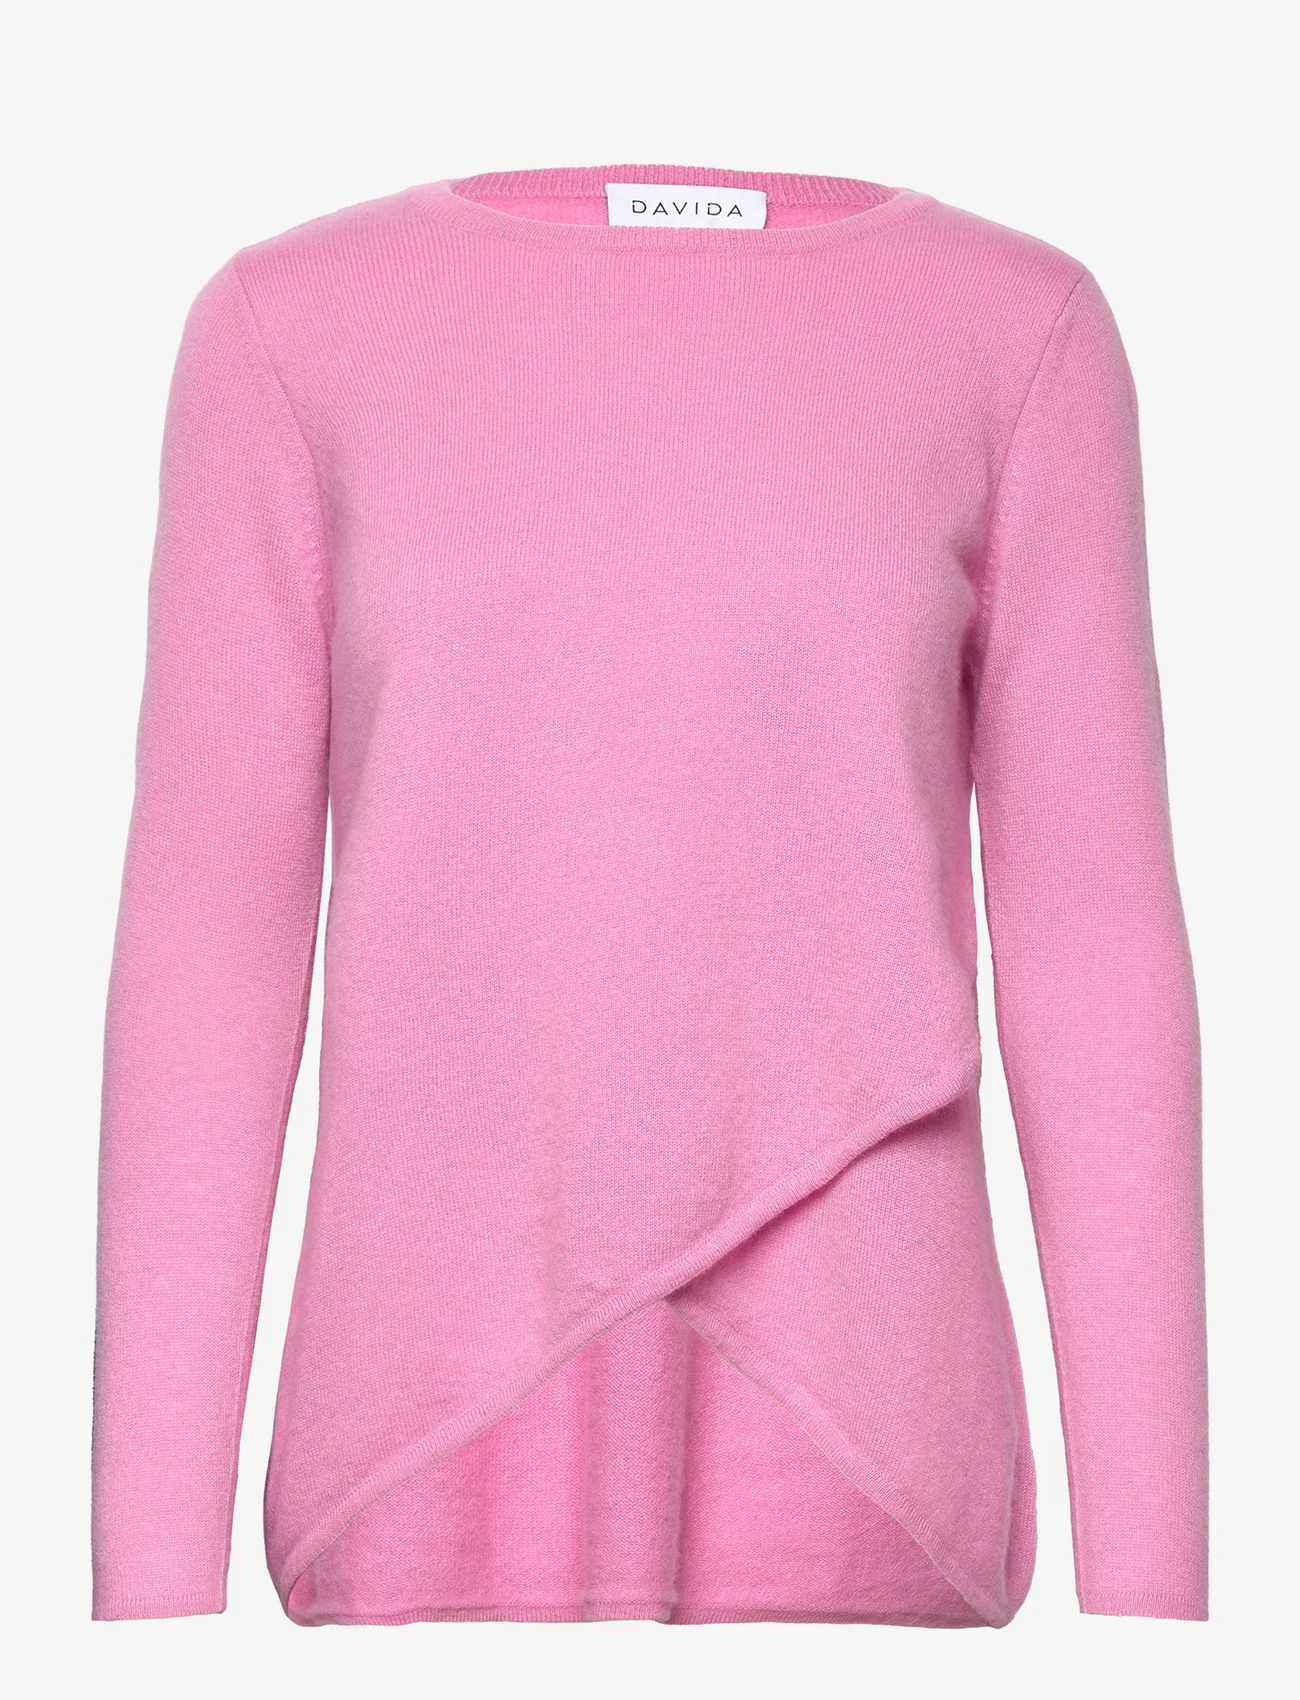 Davida Cashmere - Wrap Front Sweater - rose pink - 0